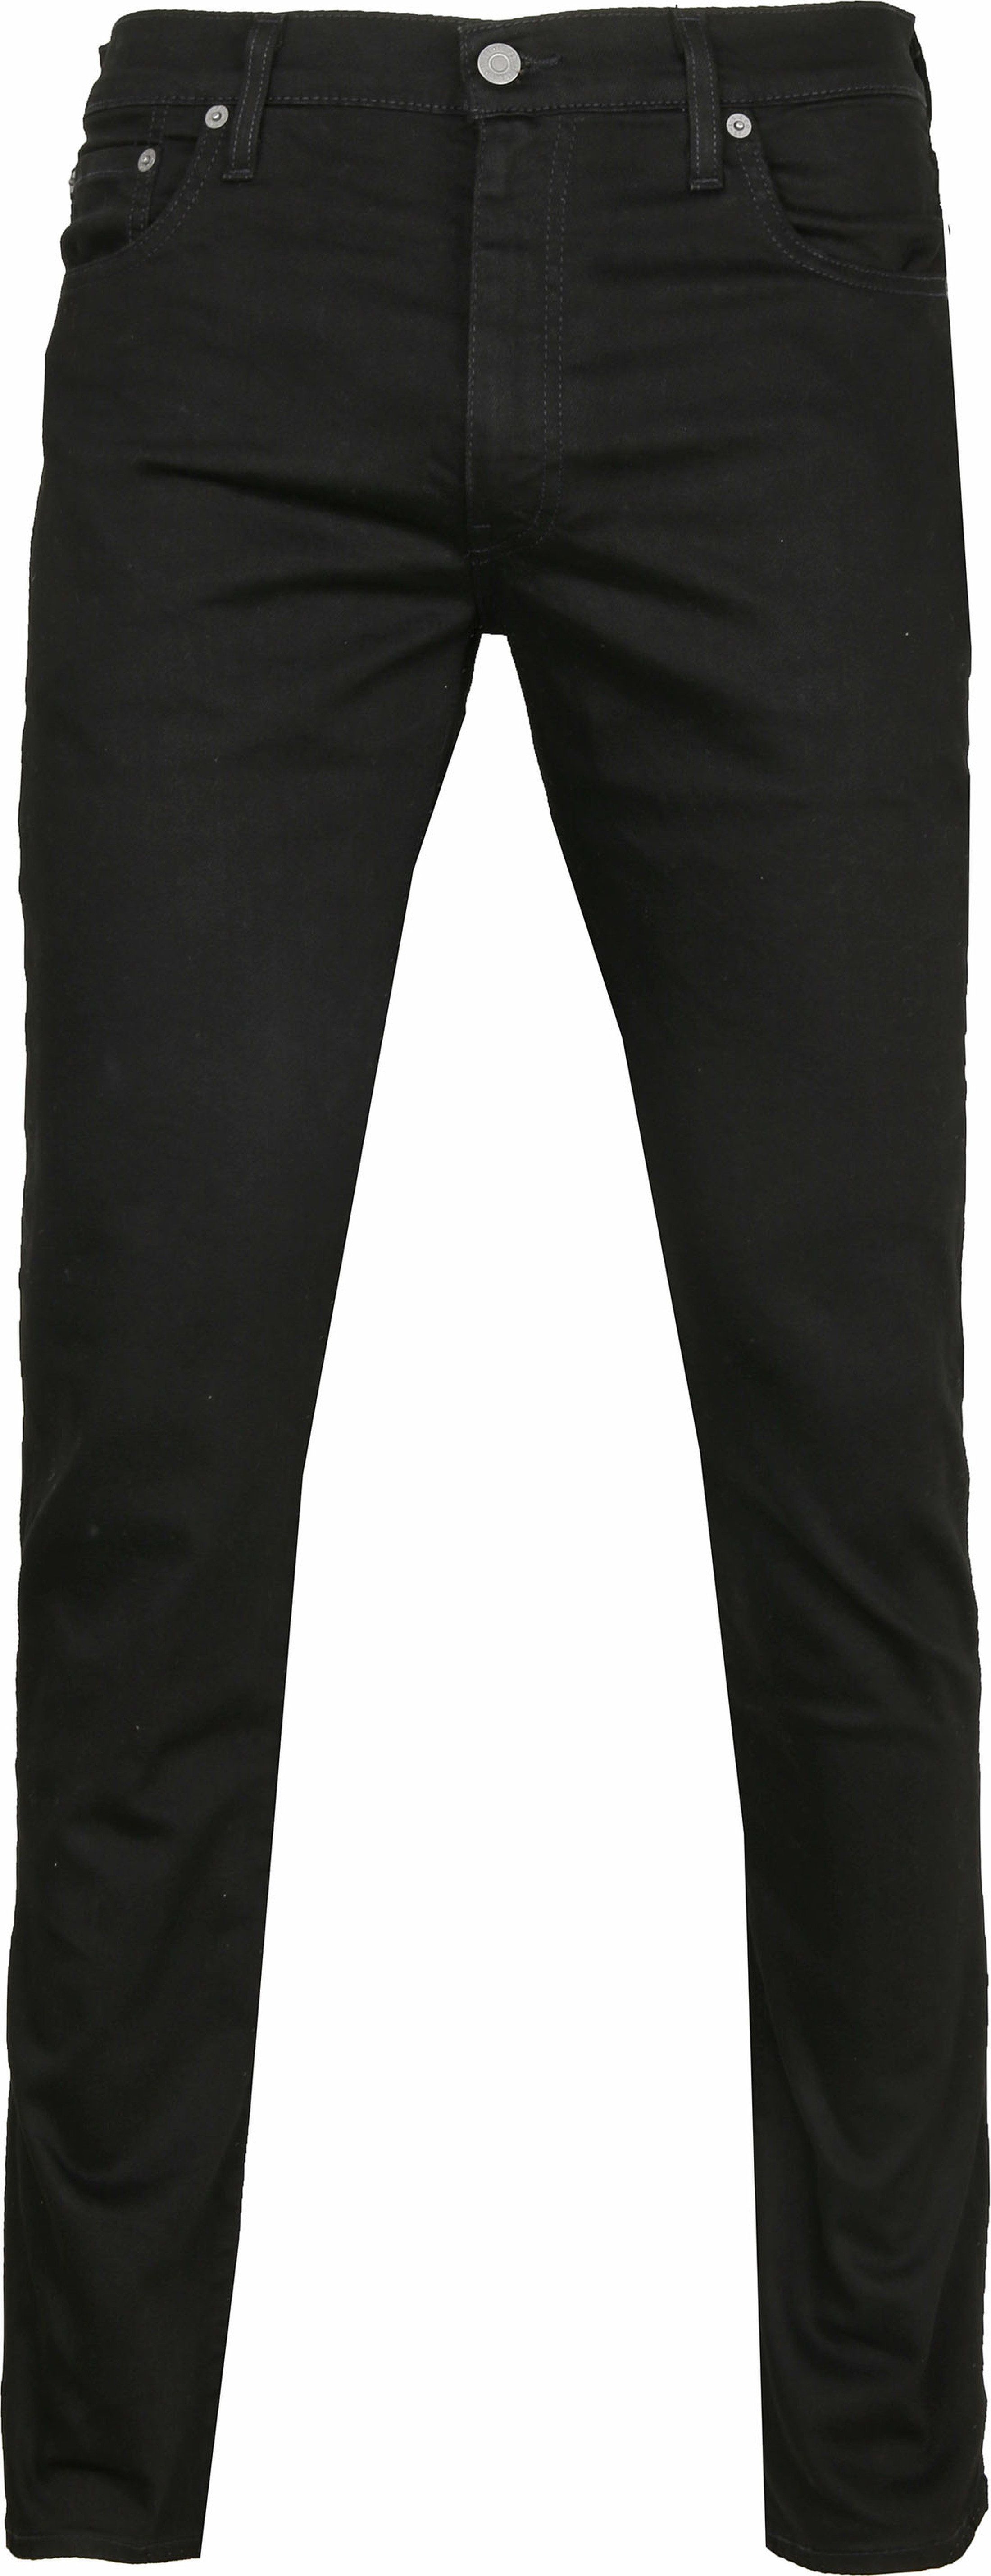 Levi's 511 Jeans Nightshine Black size W 31